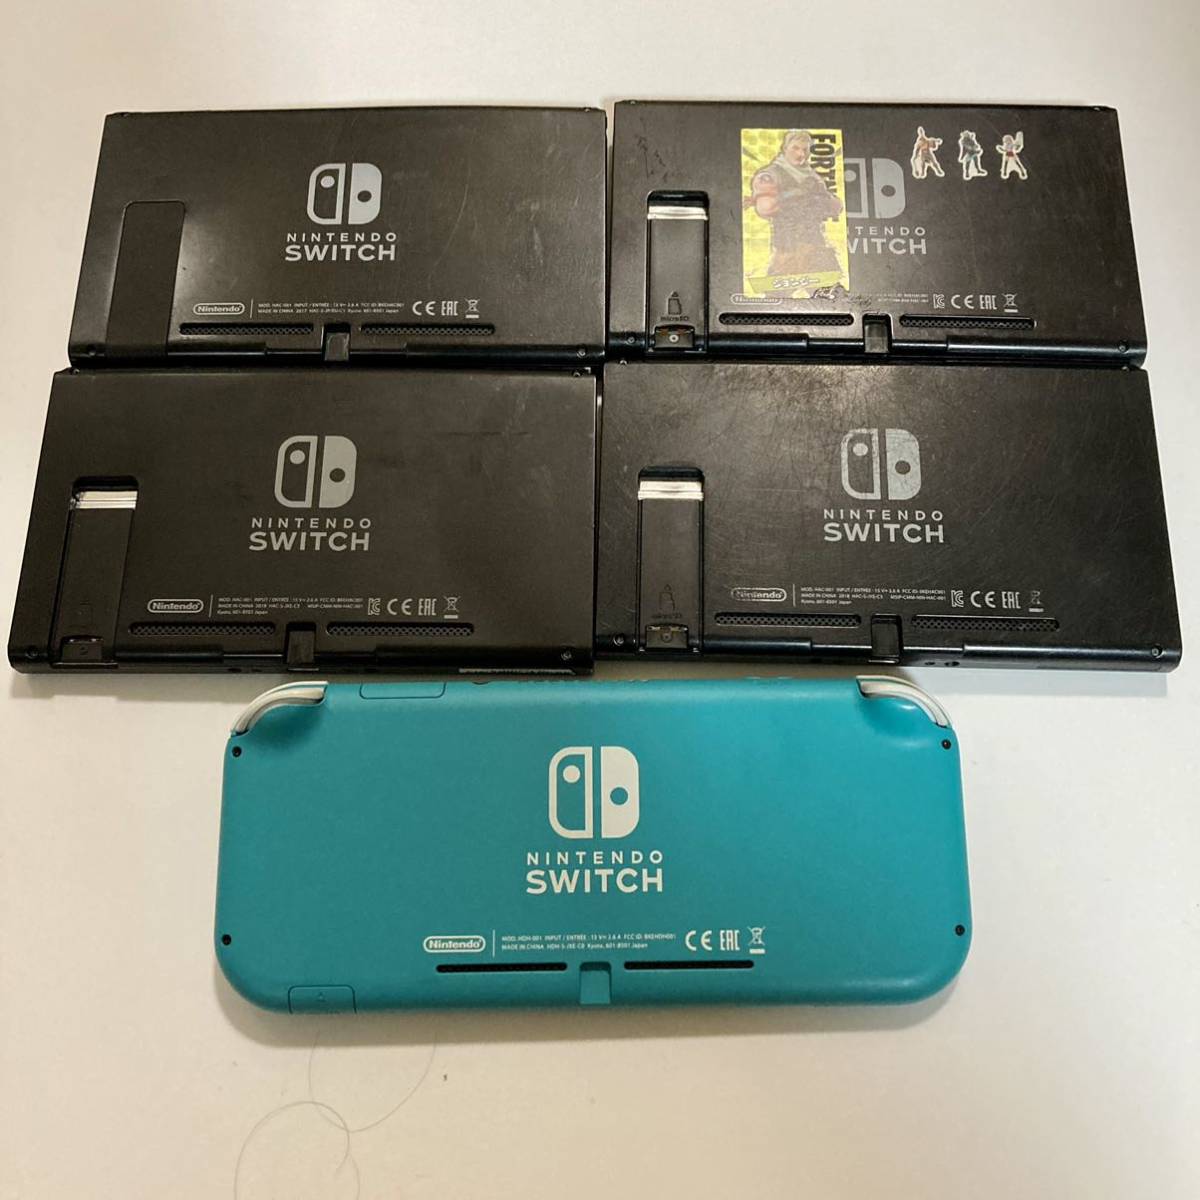 Nintendo Switch 本体ジャンク品 - library.iainponorogo.ac.id